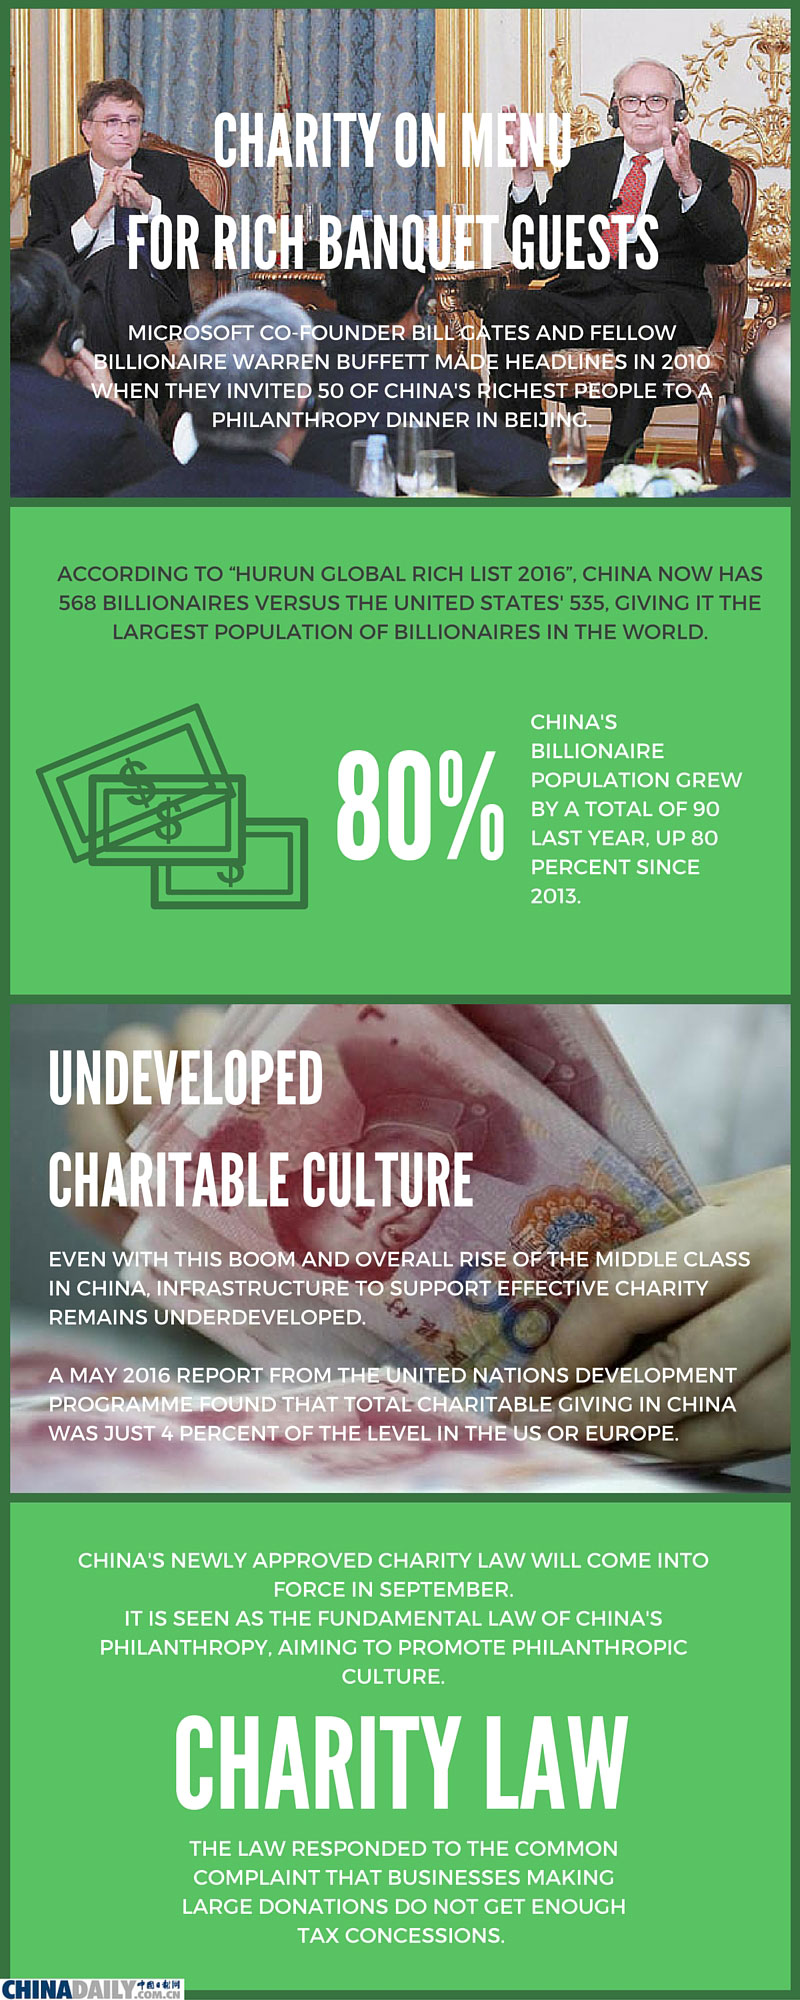 Infographic: Decoding Chinese tech corporate philanthropists